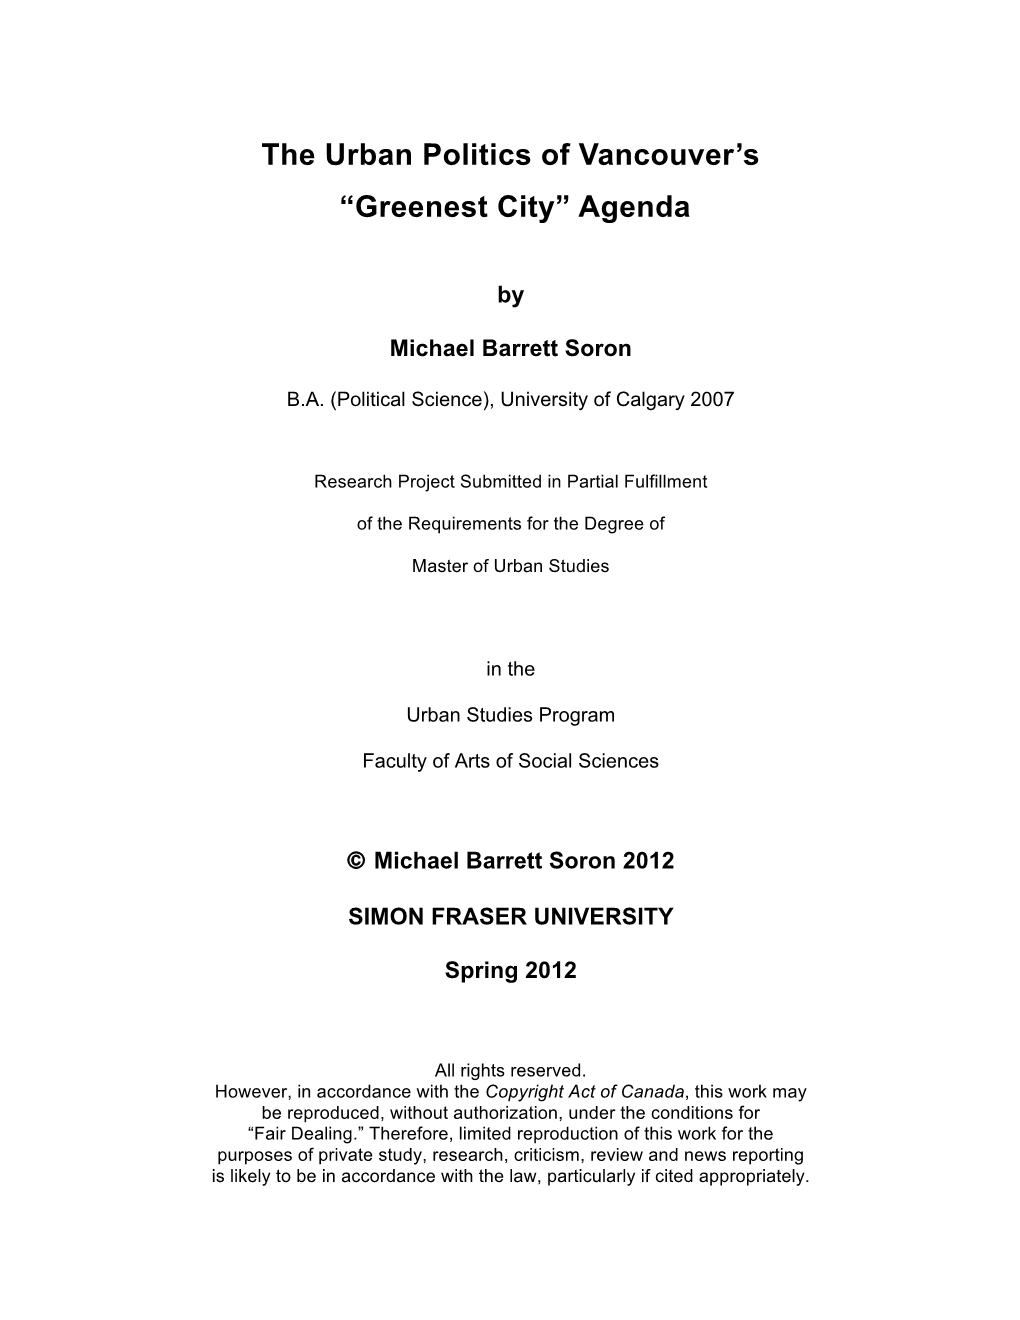 Greenest City” Agenda